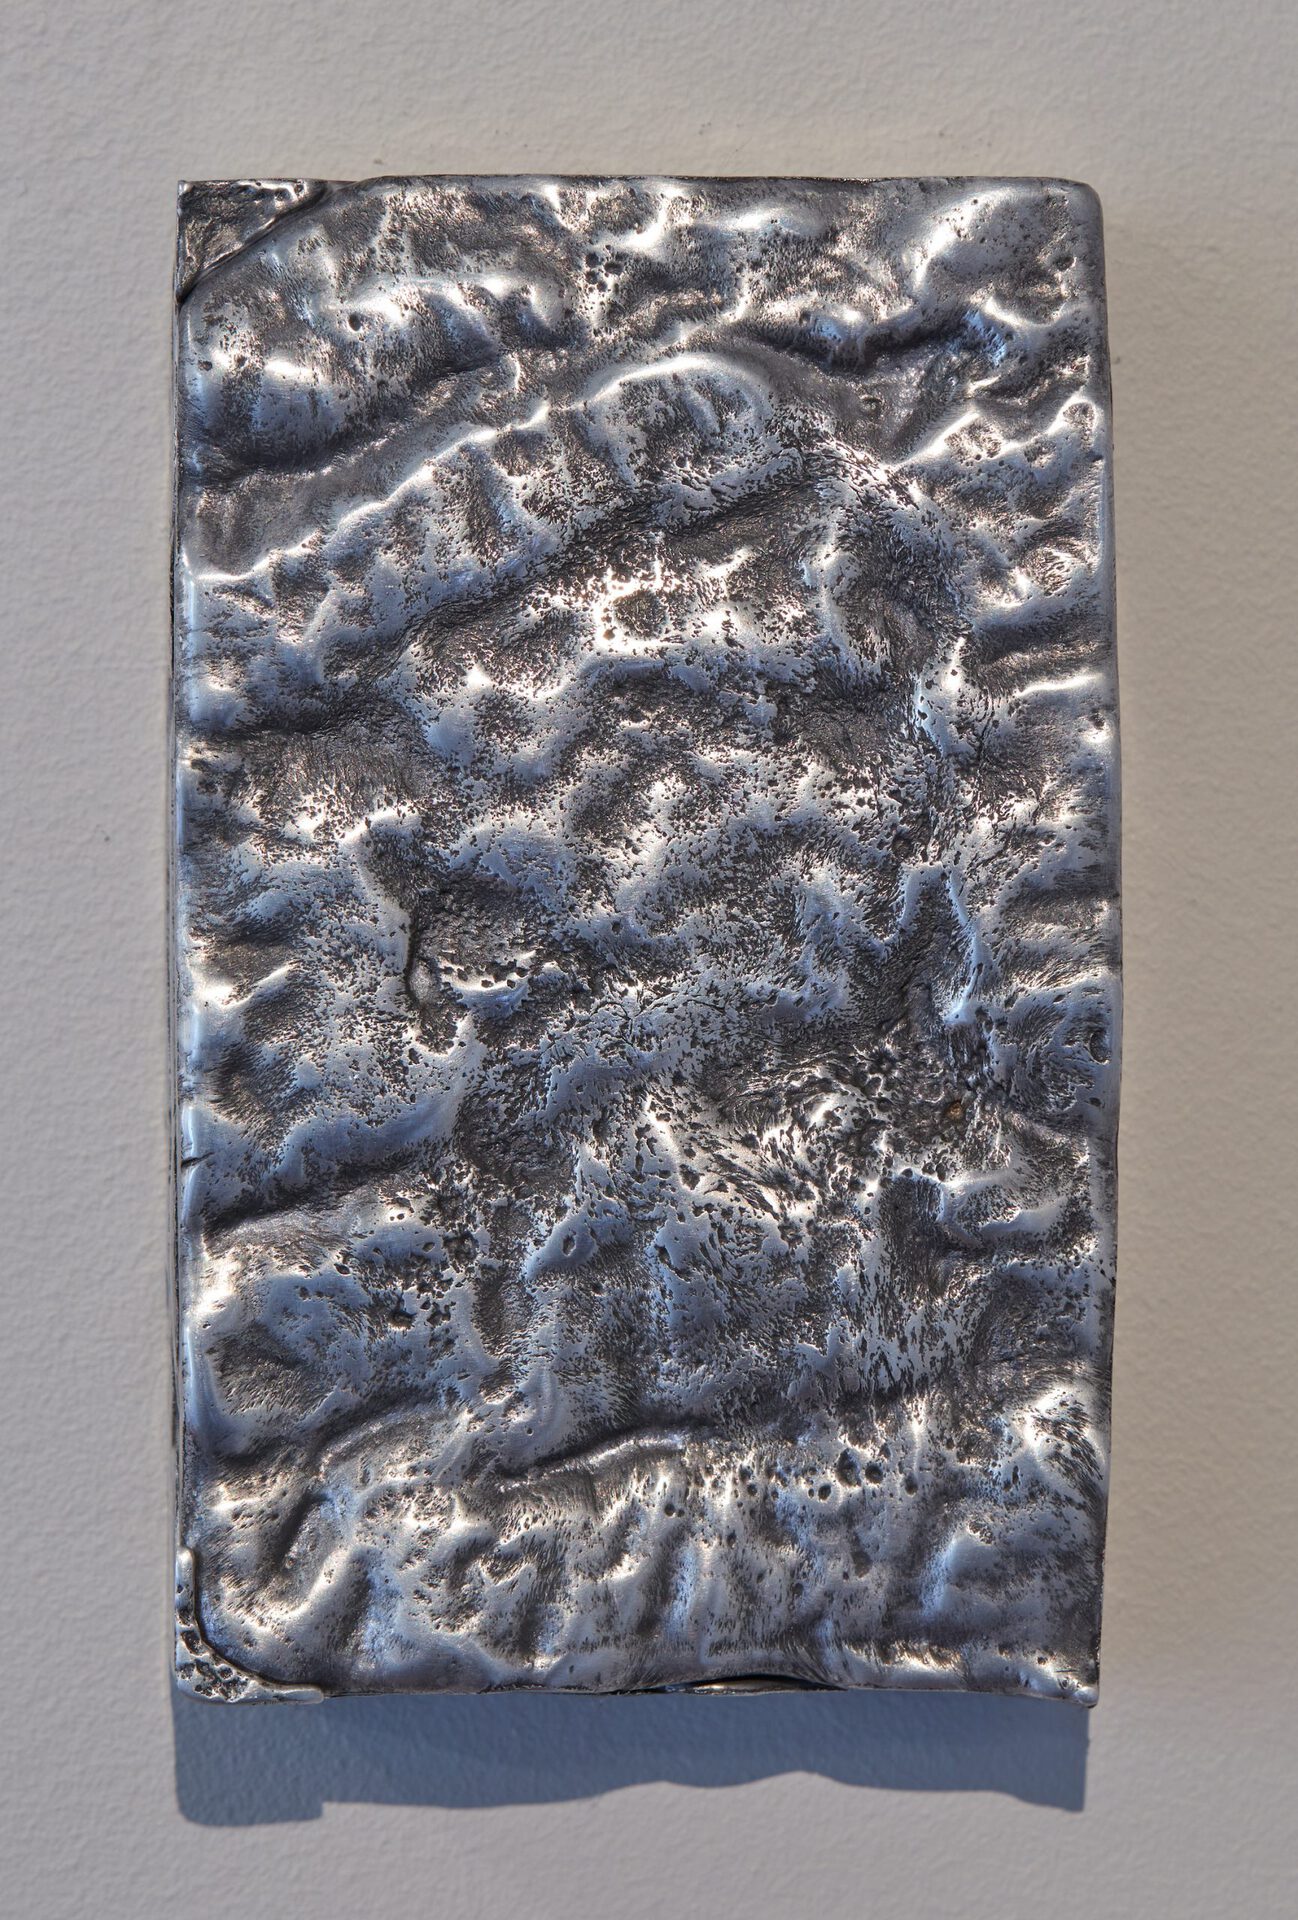 Irina Lotarevich, furs, tiny grains of rock, rough bark, 2020, cast and polished aluminium, 10 x 17 x 4,5 cm